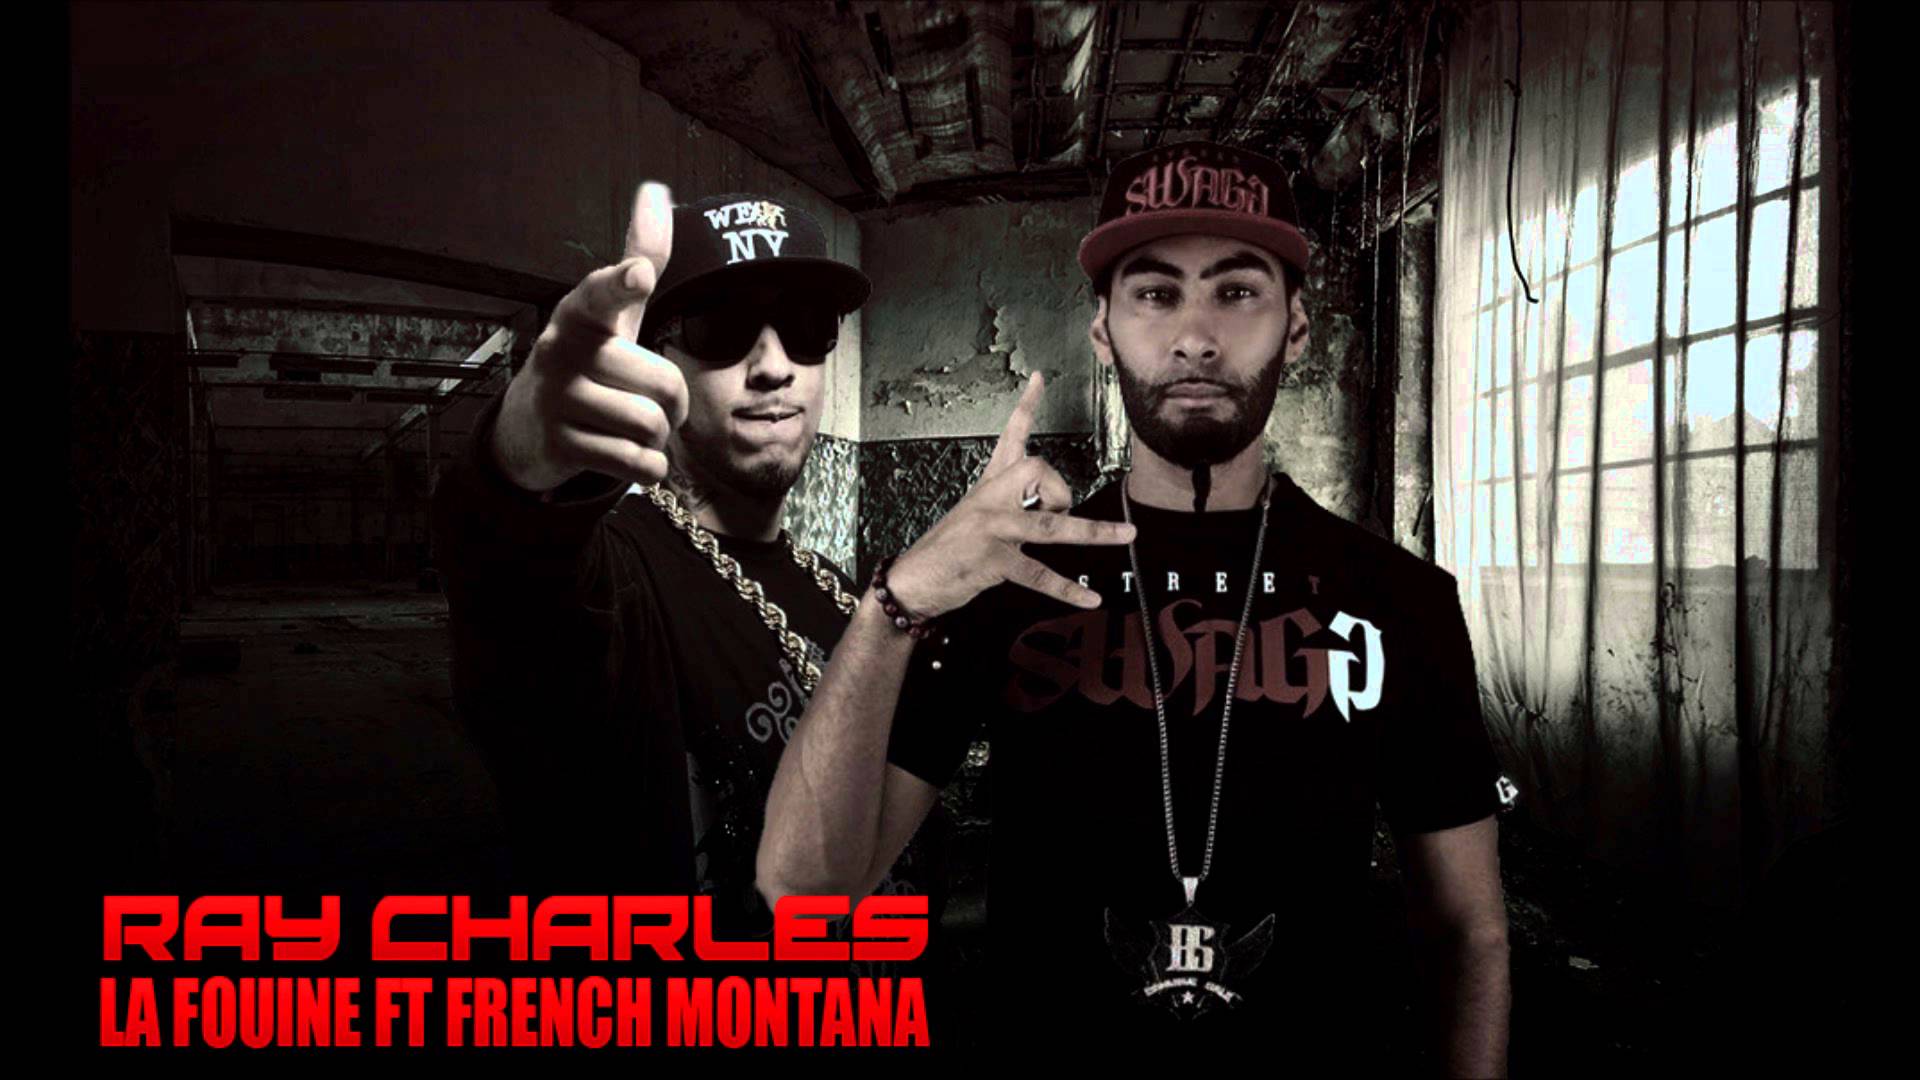 La fouine ft French Montana - Ray Charles 2013 HD - YouTube